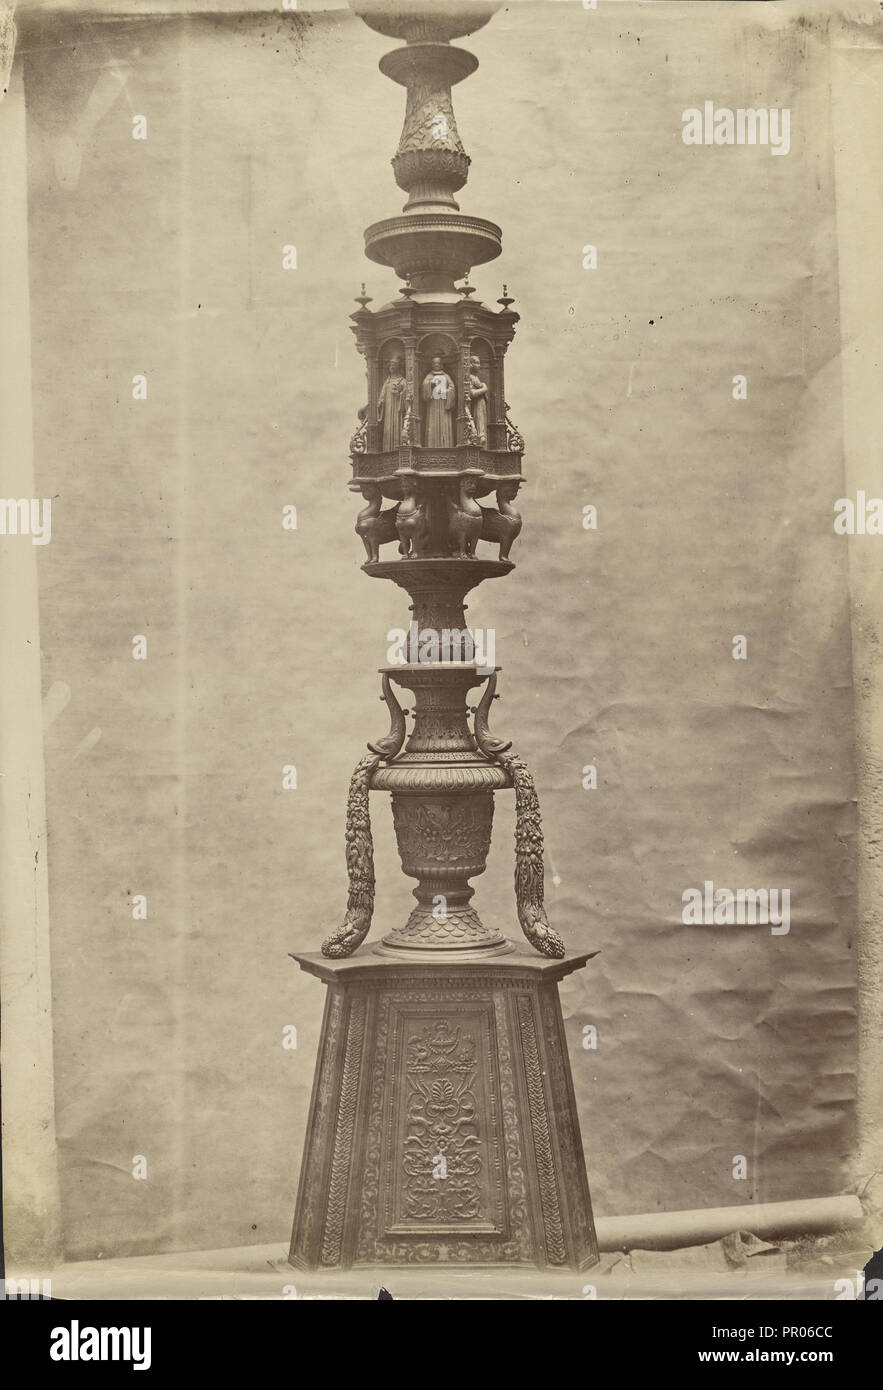 Candelabra at Santa Maria in Organo; Verona, Italy; about 1865 - 1885; Albumen silver print Stock Photo